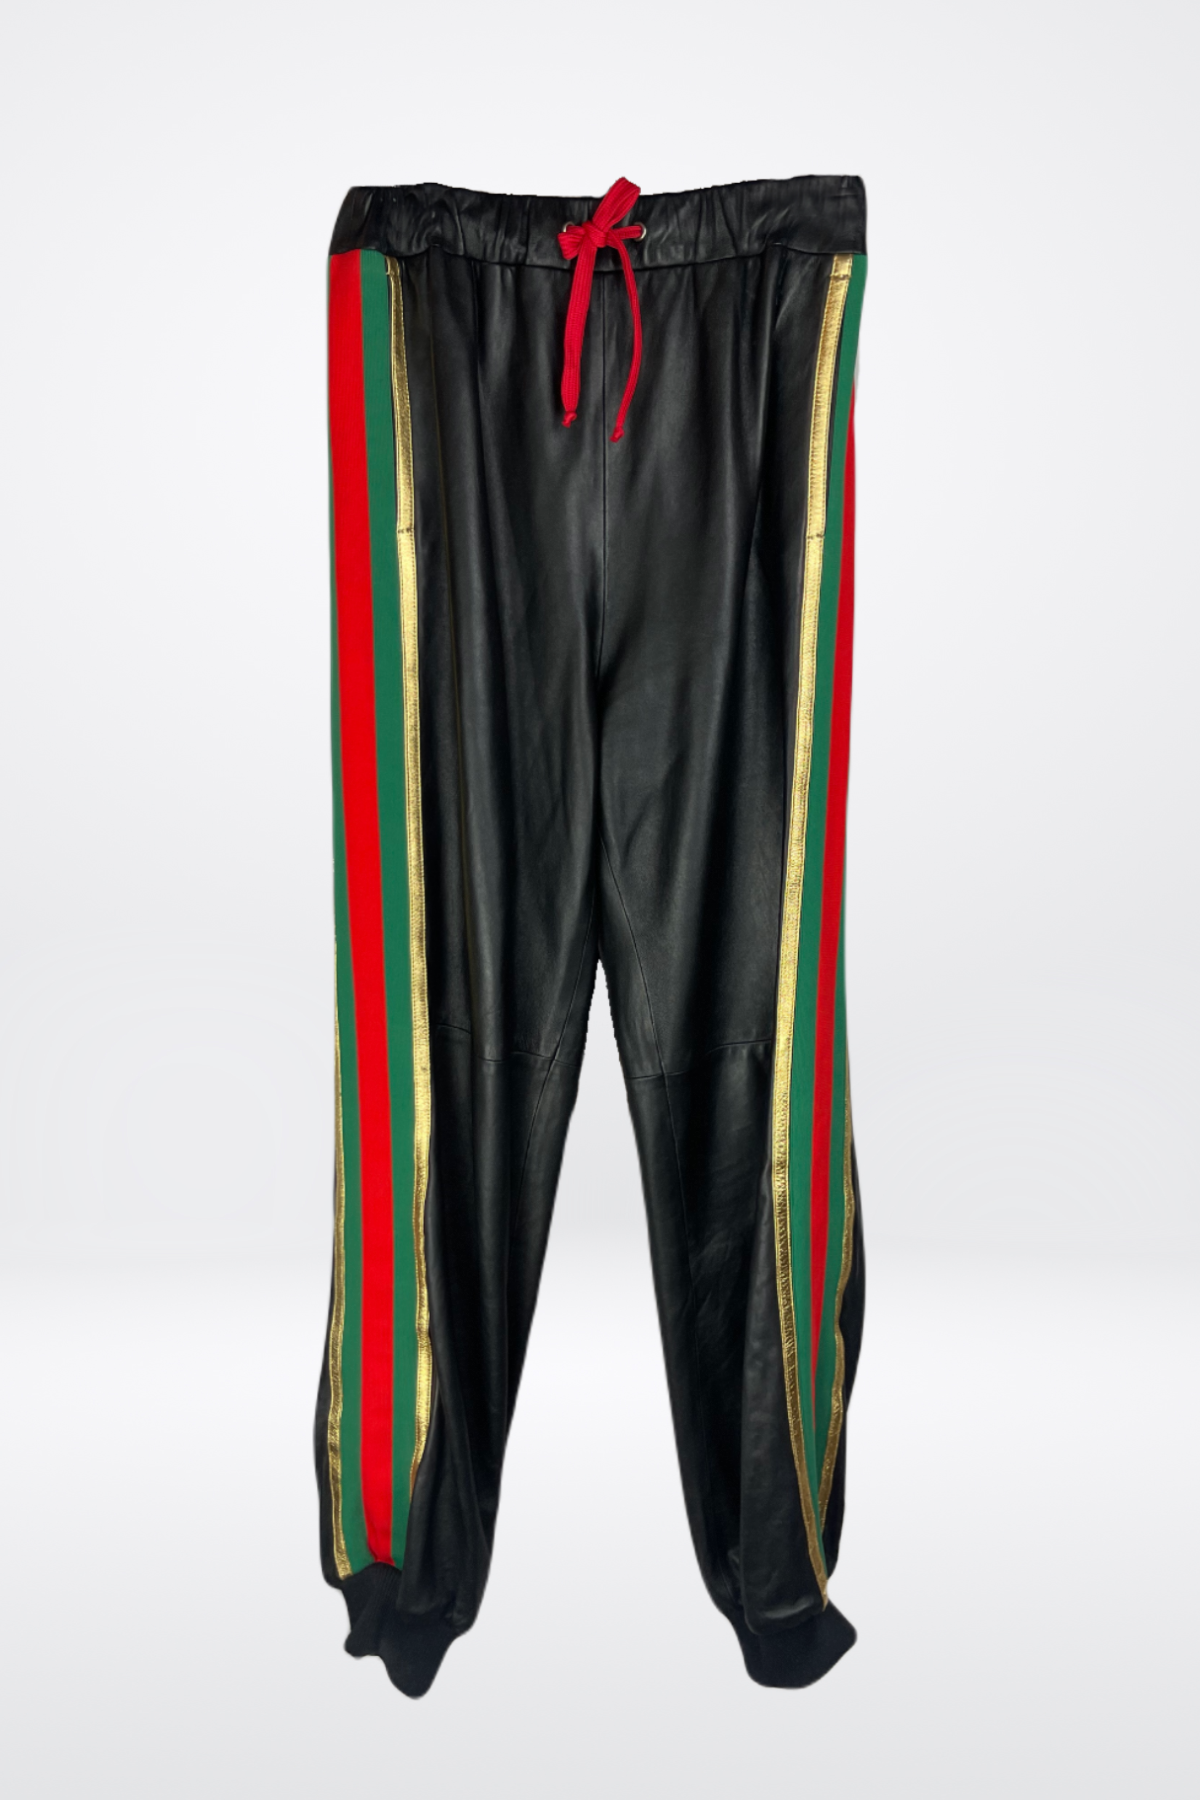 Gucci Black Leather Striped Jogger Pants